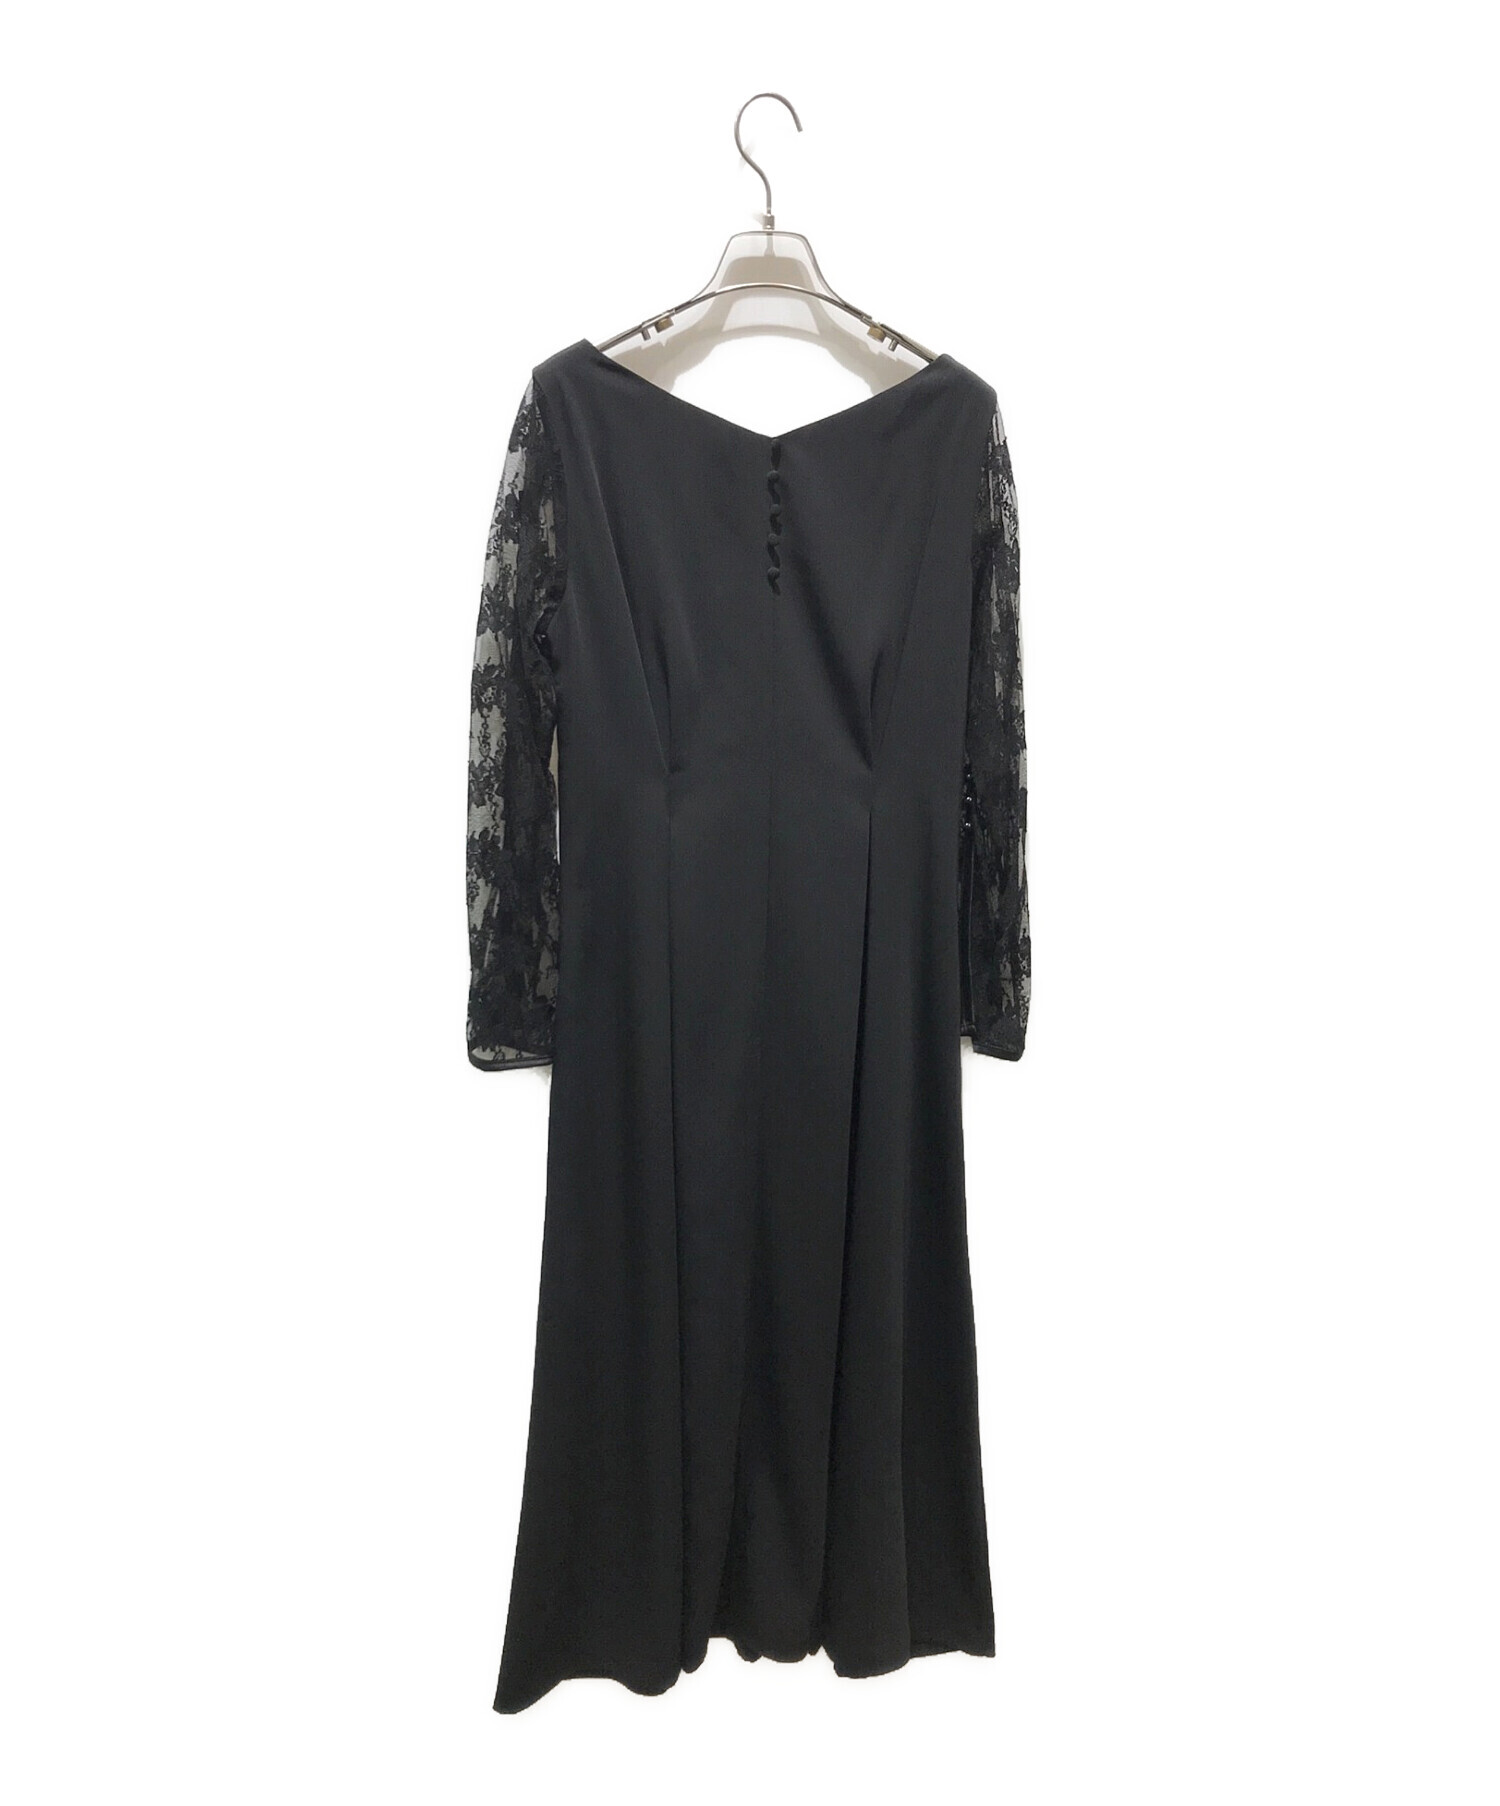 Ameri (アメリ) VINTAGE LACE SLEEVE REFINED DRESS　0282531021 ブラック サイズ:記載無しの為実寸参照